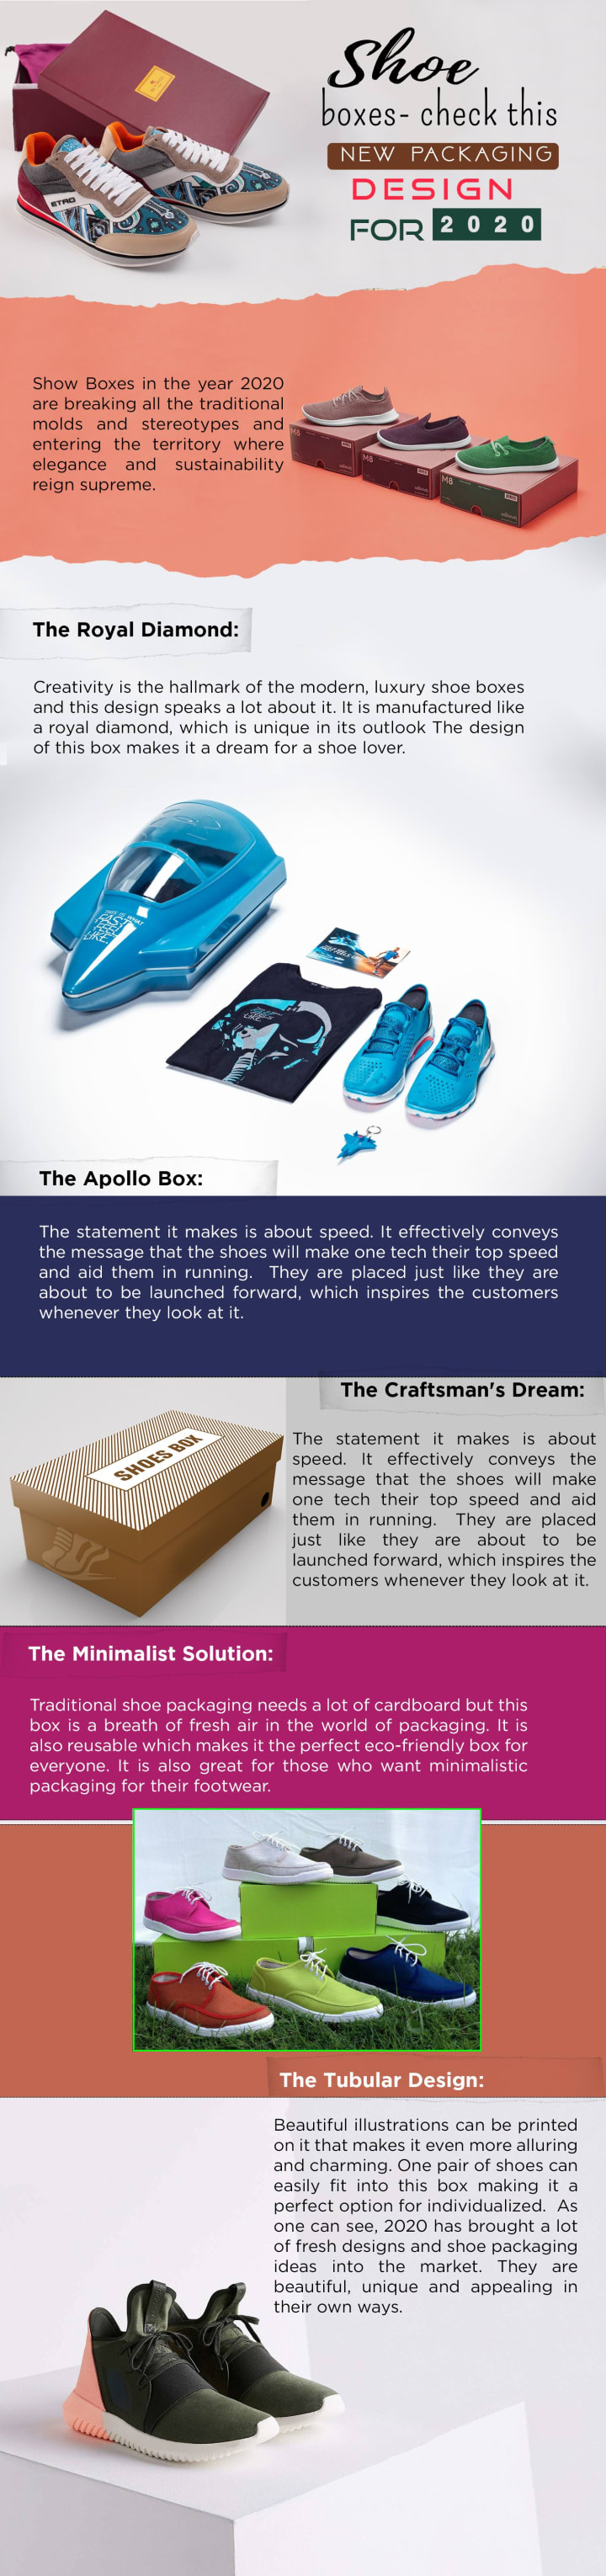 shoe box brands